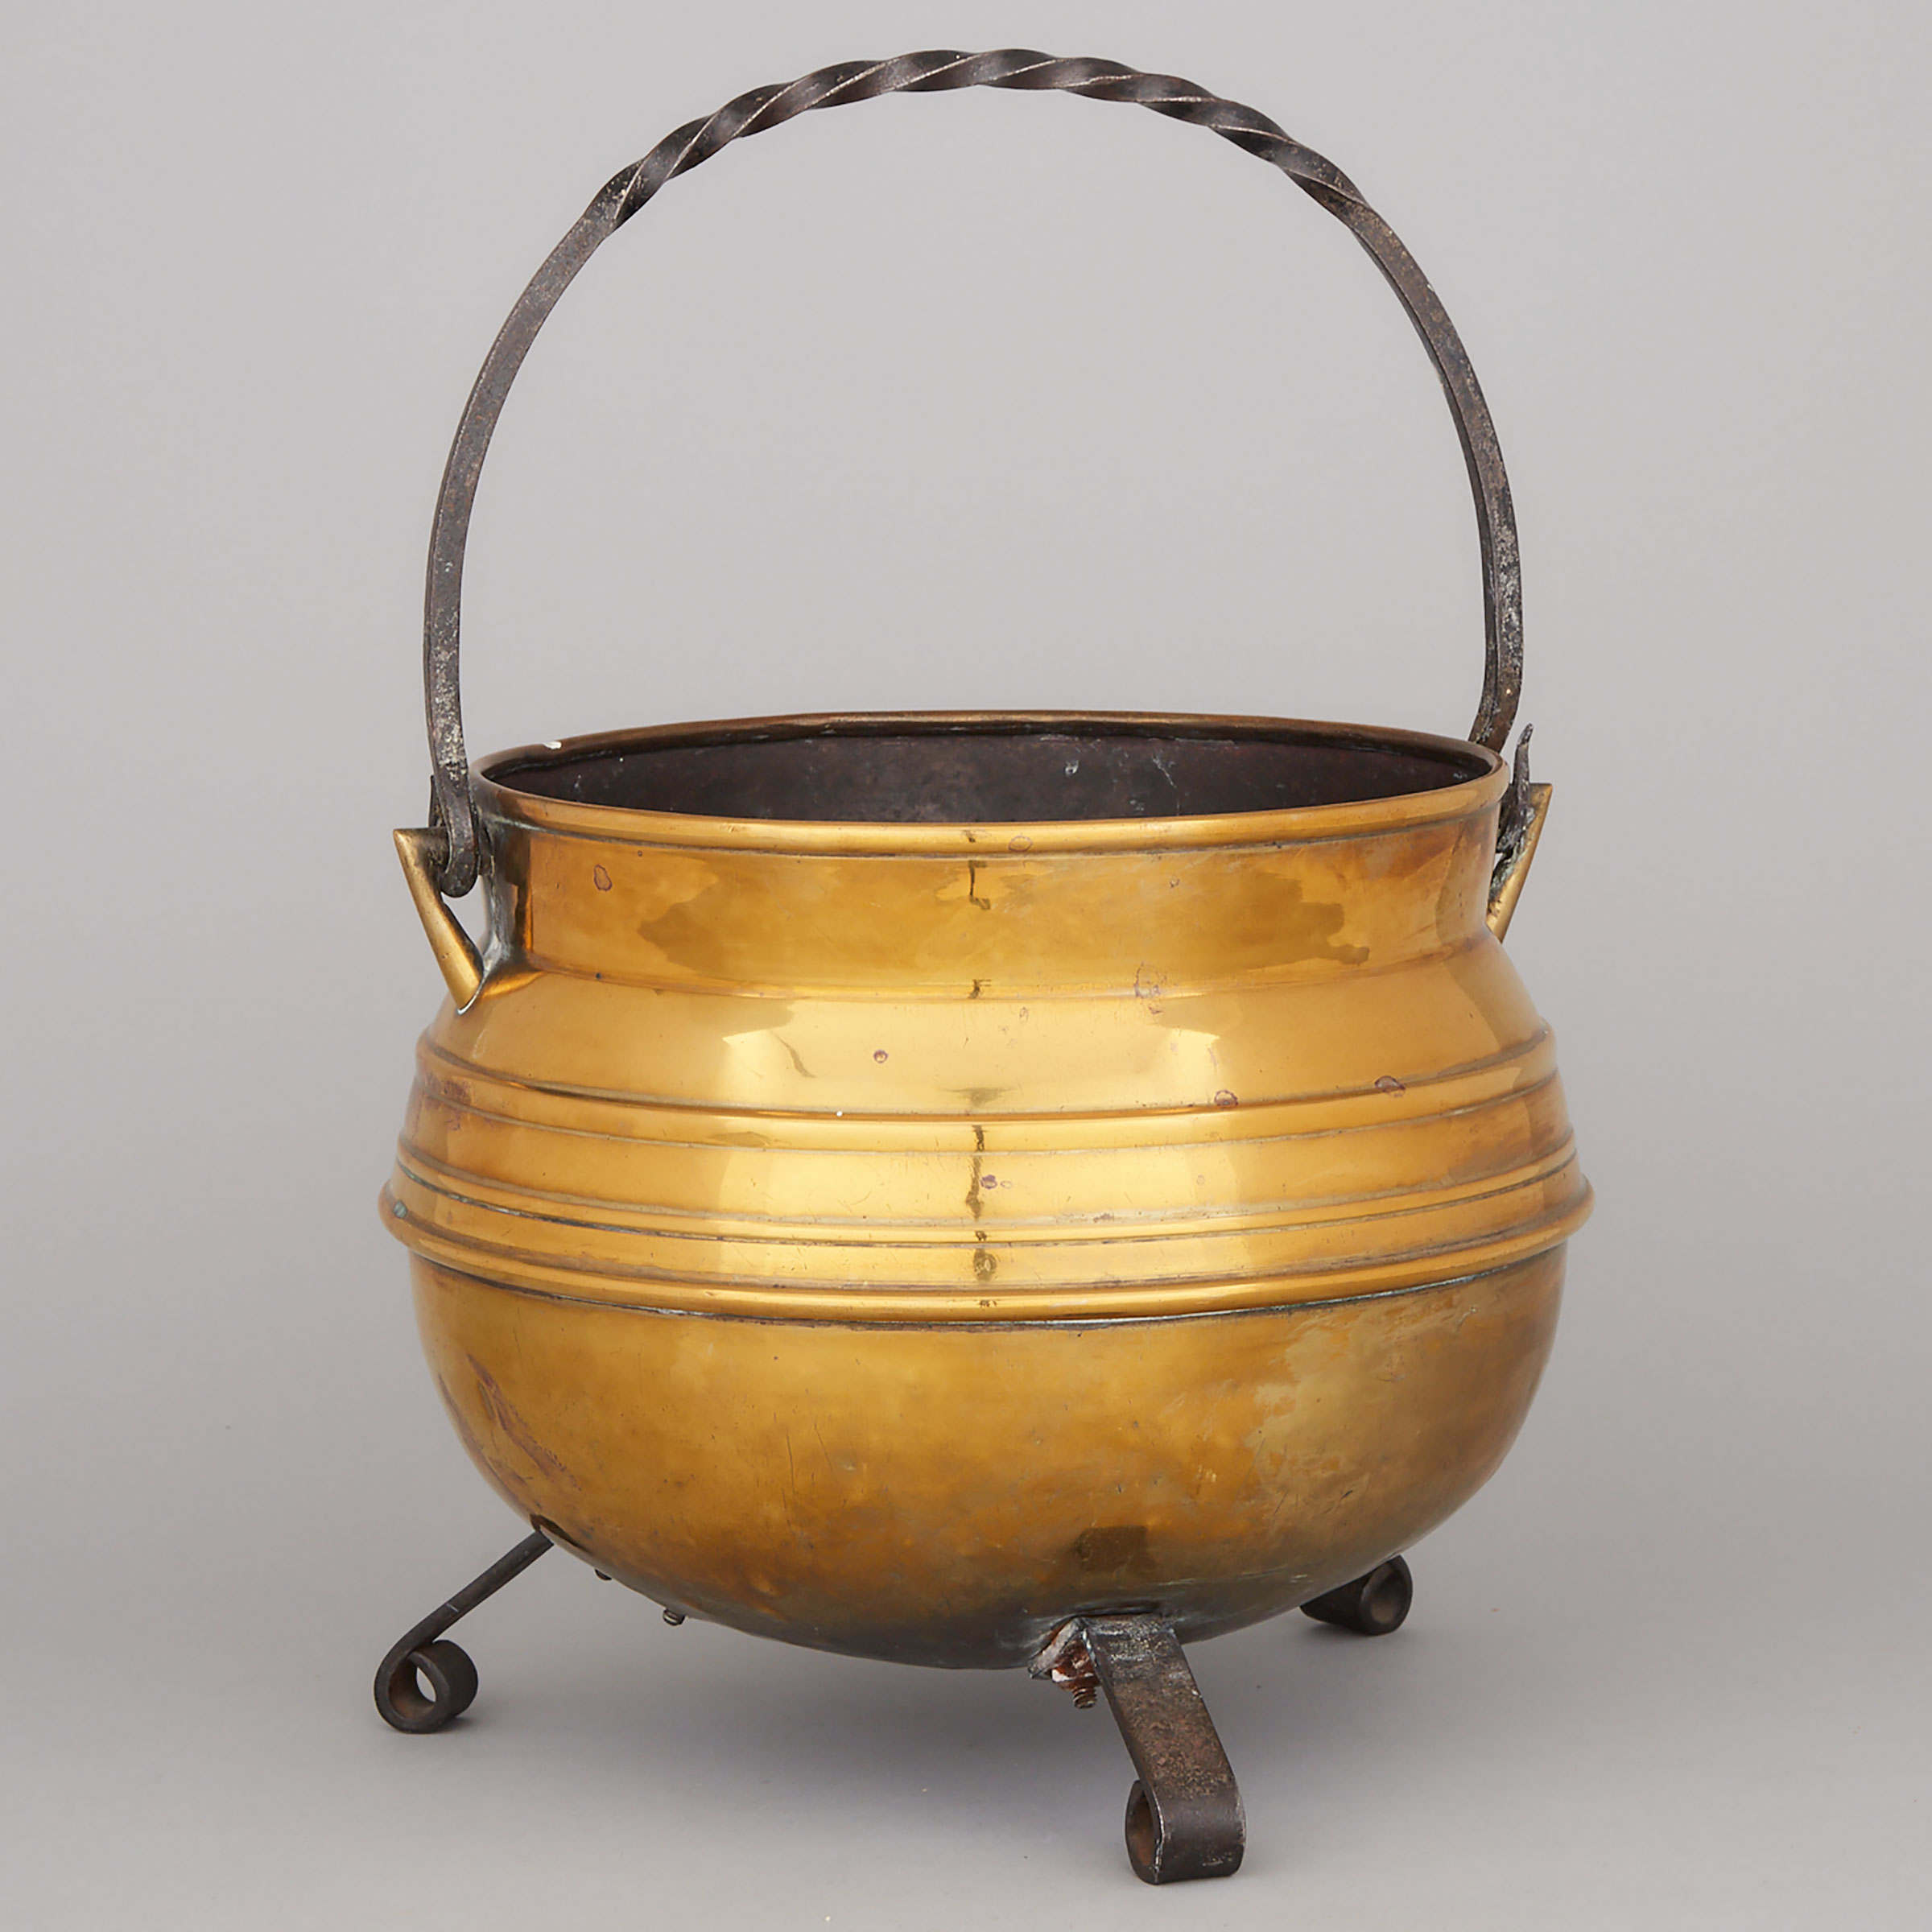 English Iron Mounted Brass Cauldron, Henry Loveridge & Co., Wolverhampton, 19th century